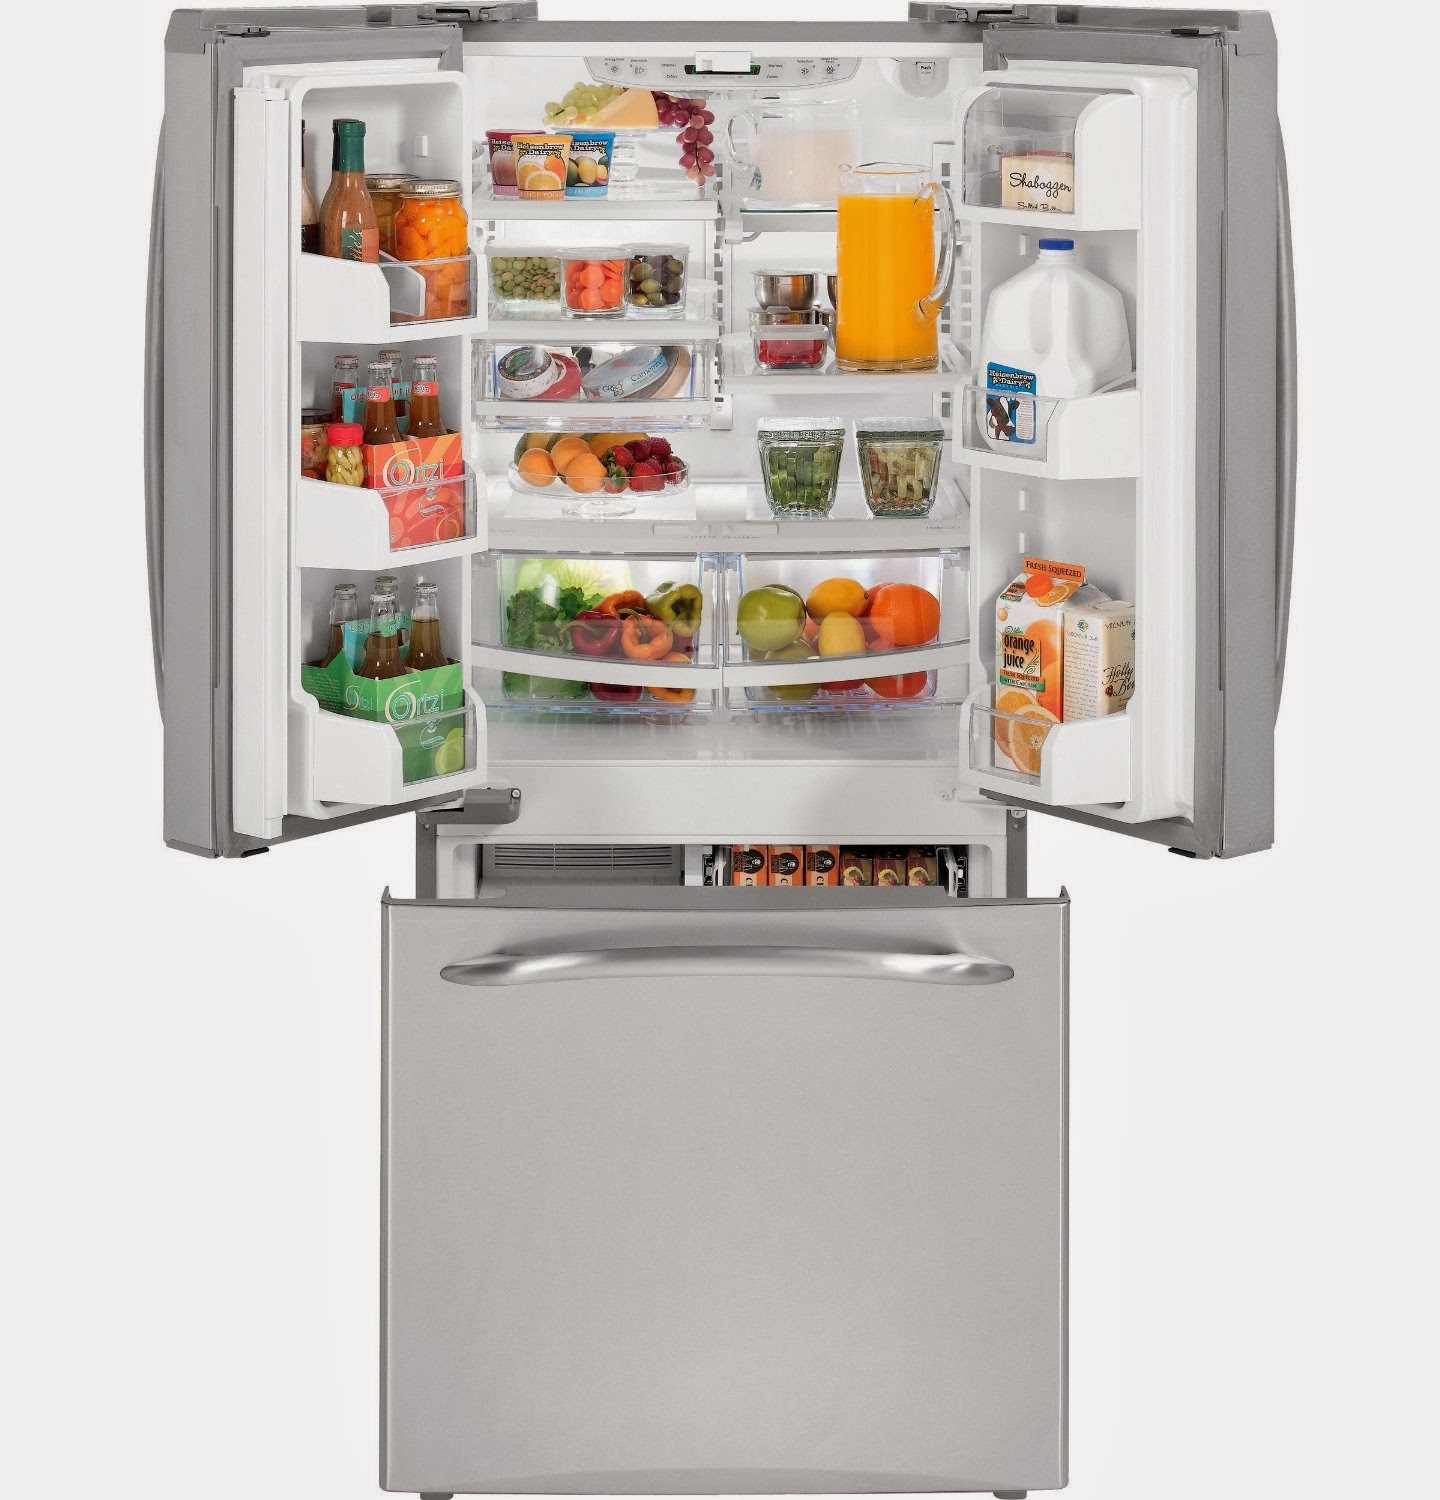 general-electric-refrigerator-general-electric-bottom-freezer-refrigerator